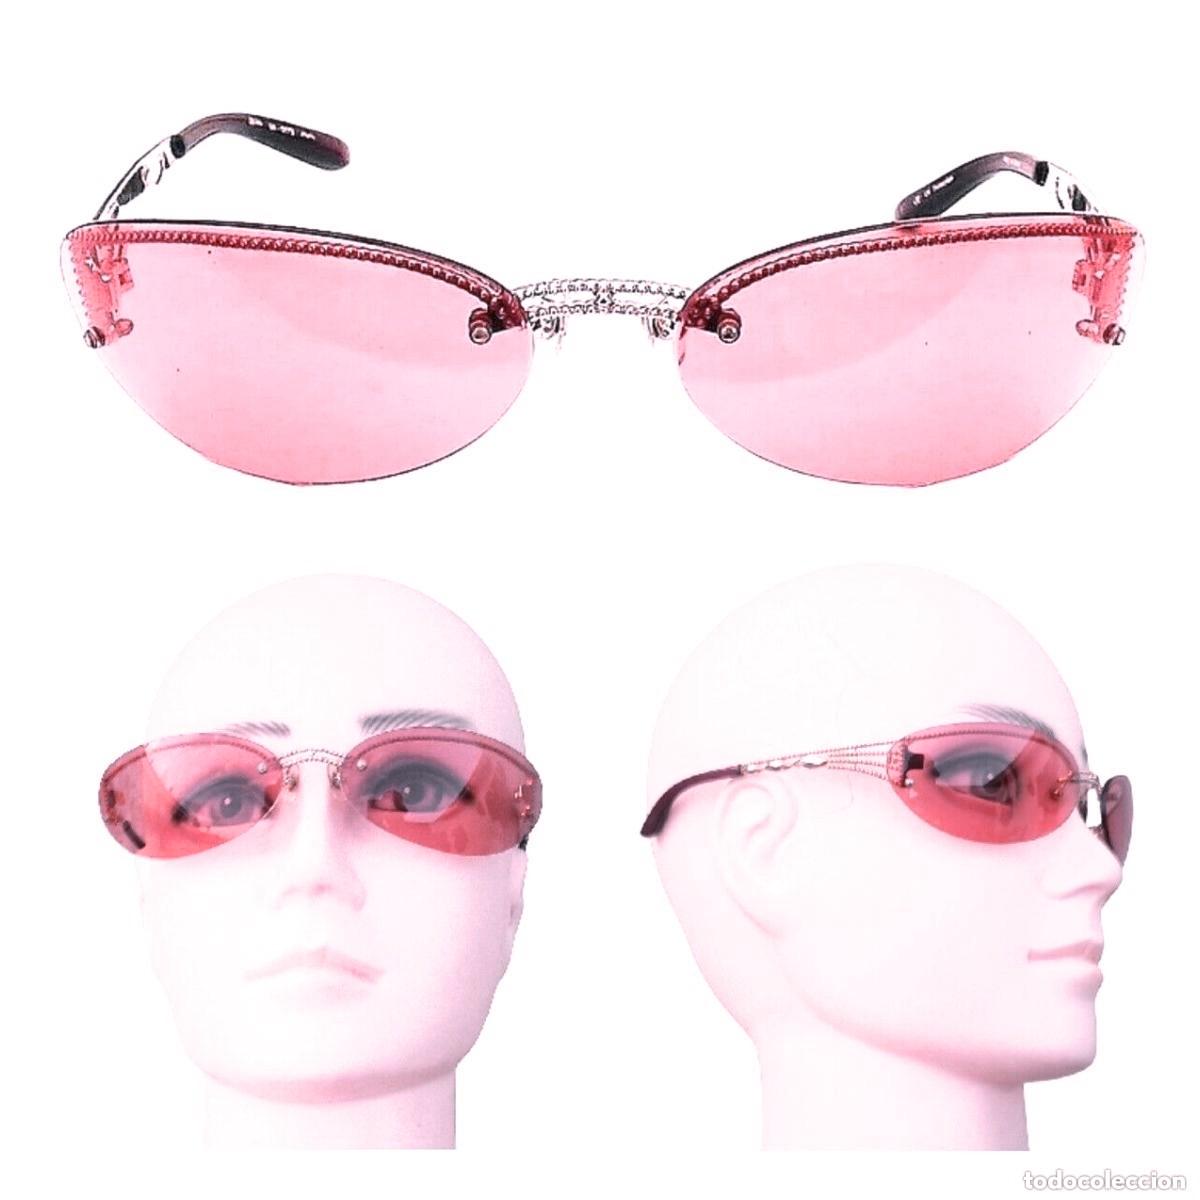 Jean Paul Gaultier 56 - 0072 made in Japan sunglasses womens pink